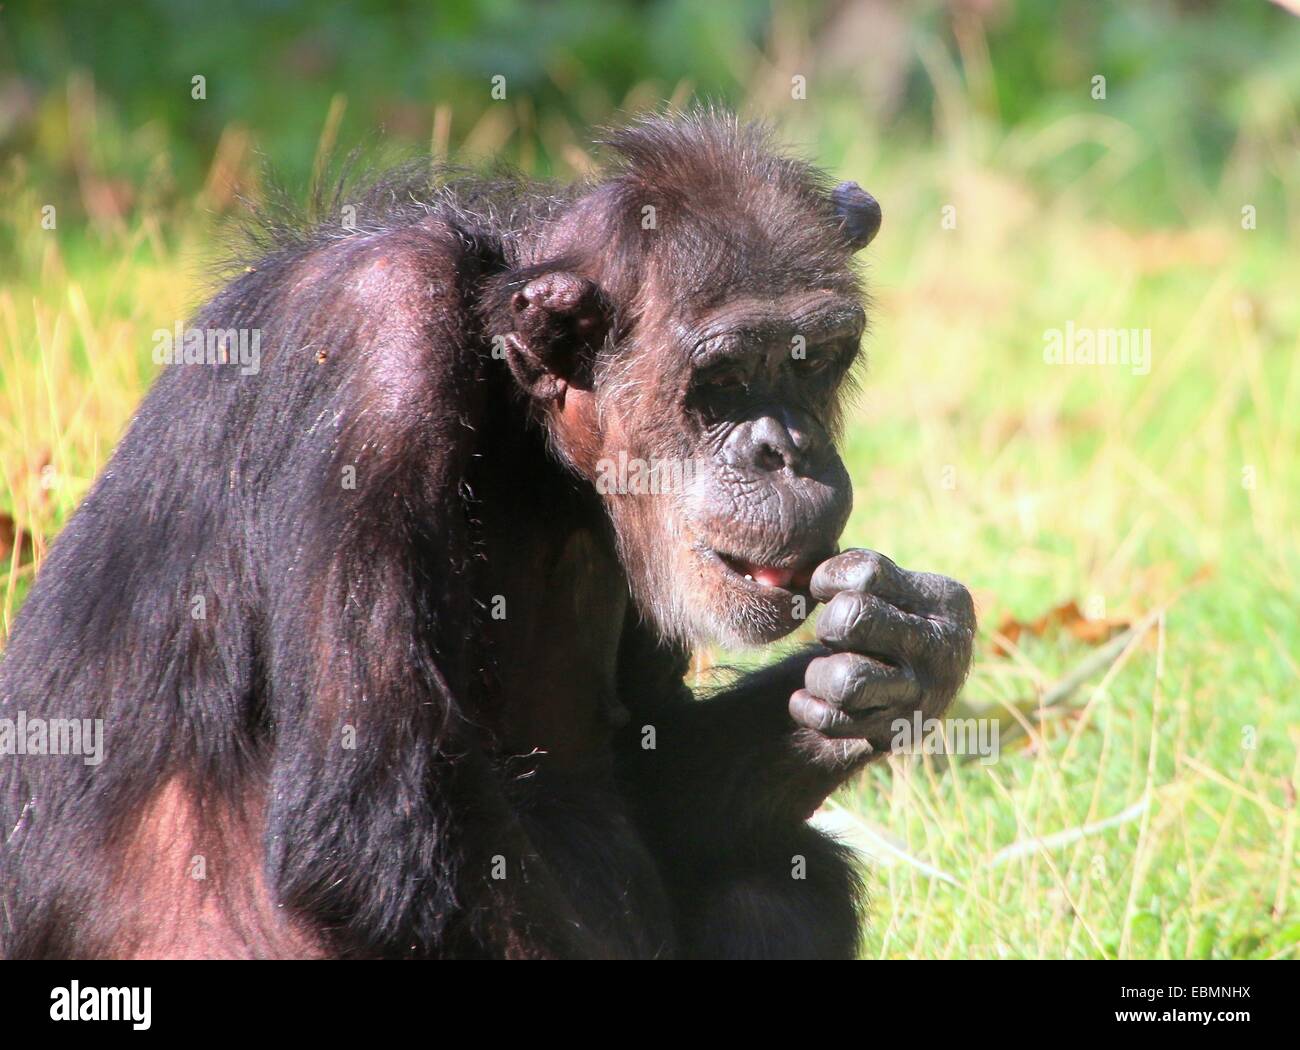 Elderly common chimpanzee (Pan troglodytes) eating nuts Stock Photo